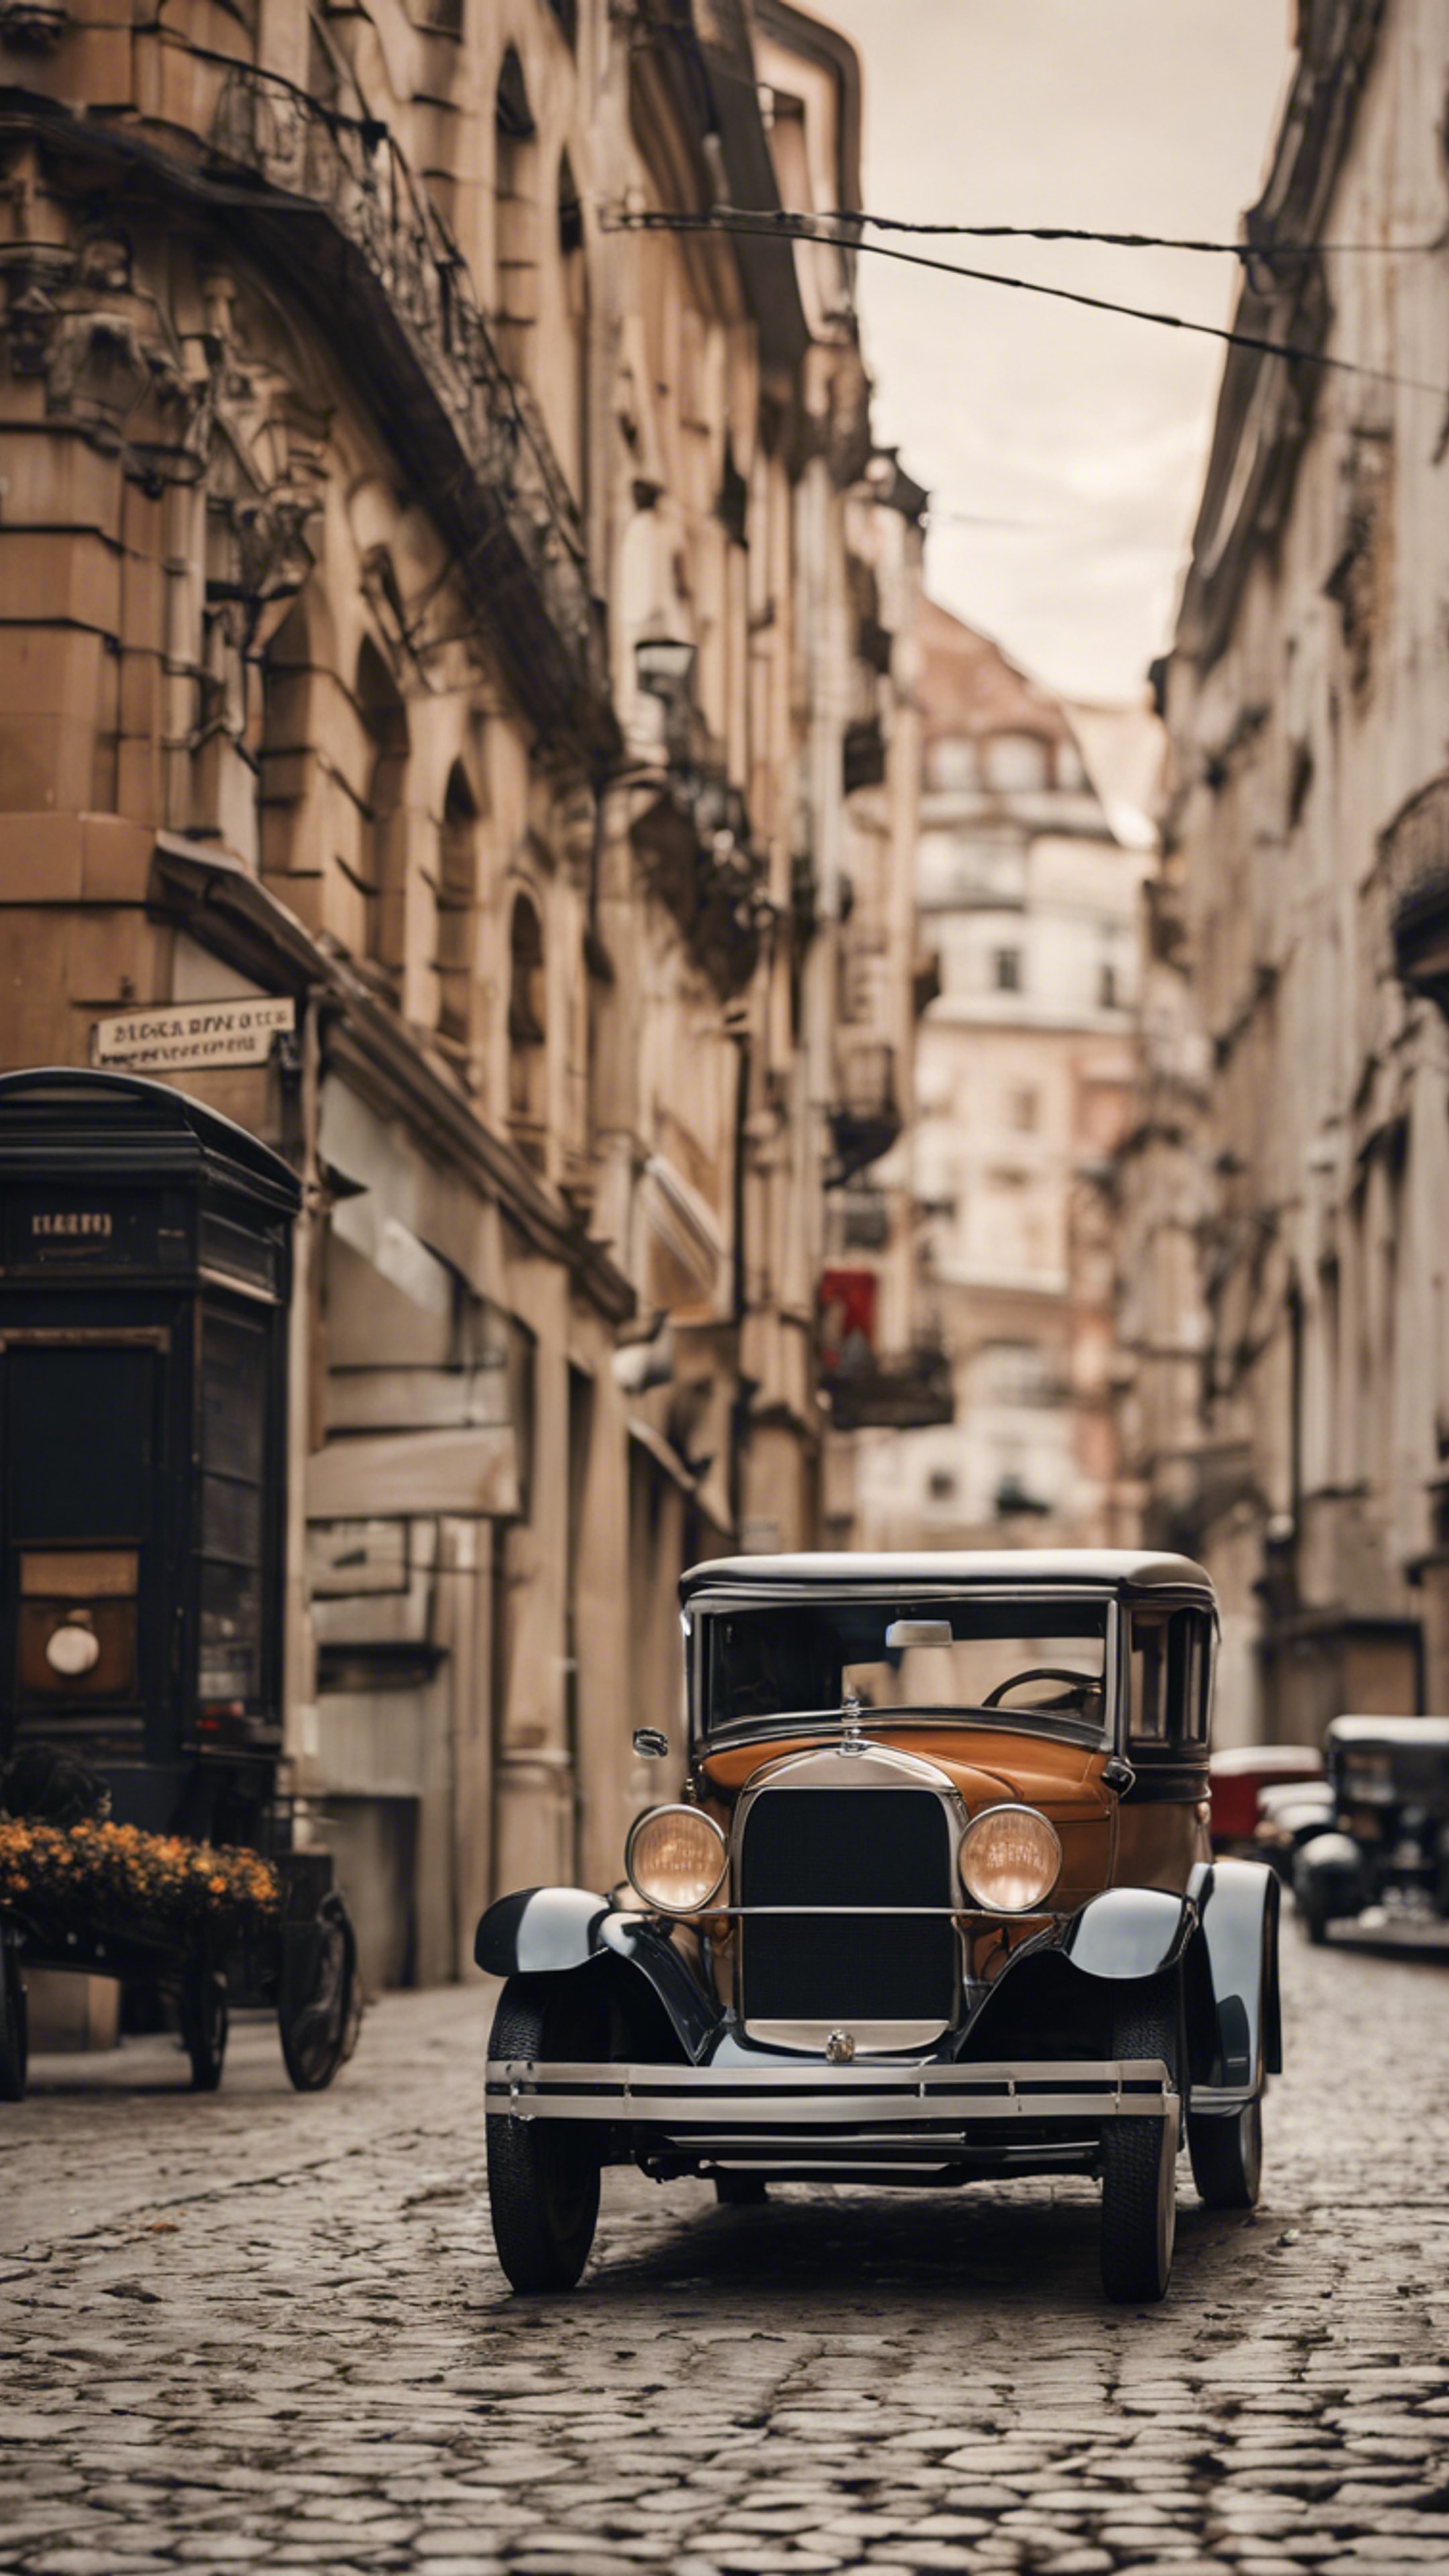 A nostalgic cityscape in the 1920s with classic cars and cobblestone streets. Ταπετσαρία[d252acda6f644acf85b4]